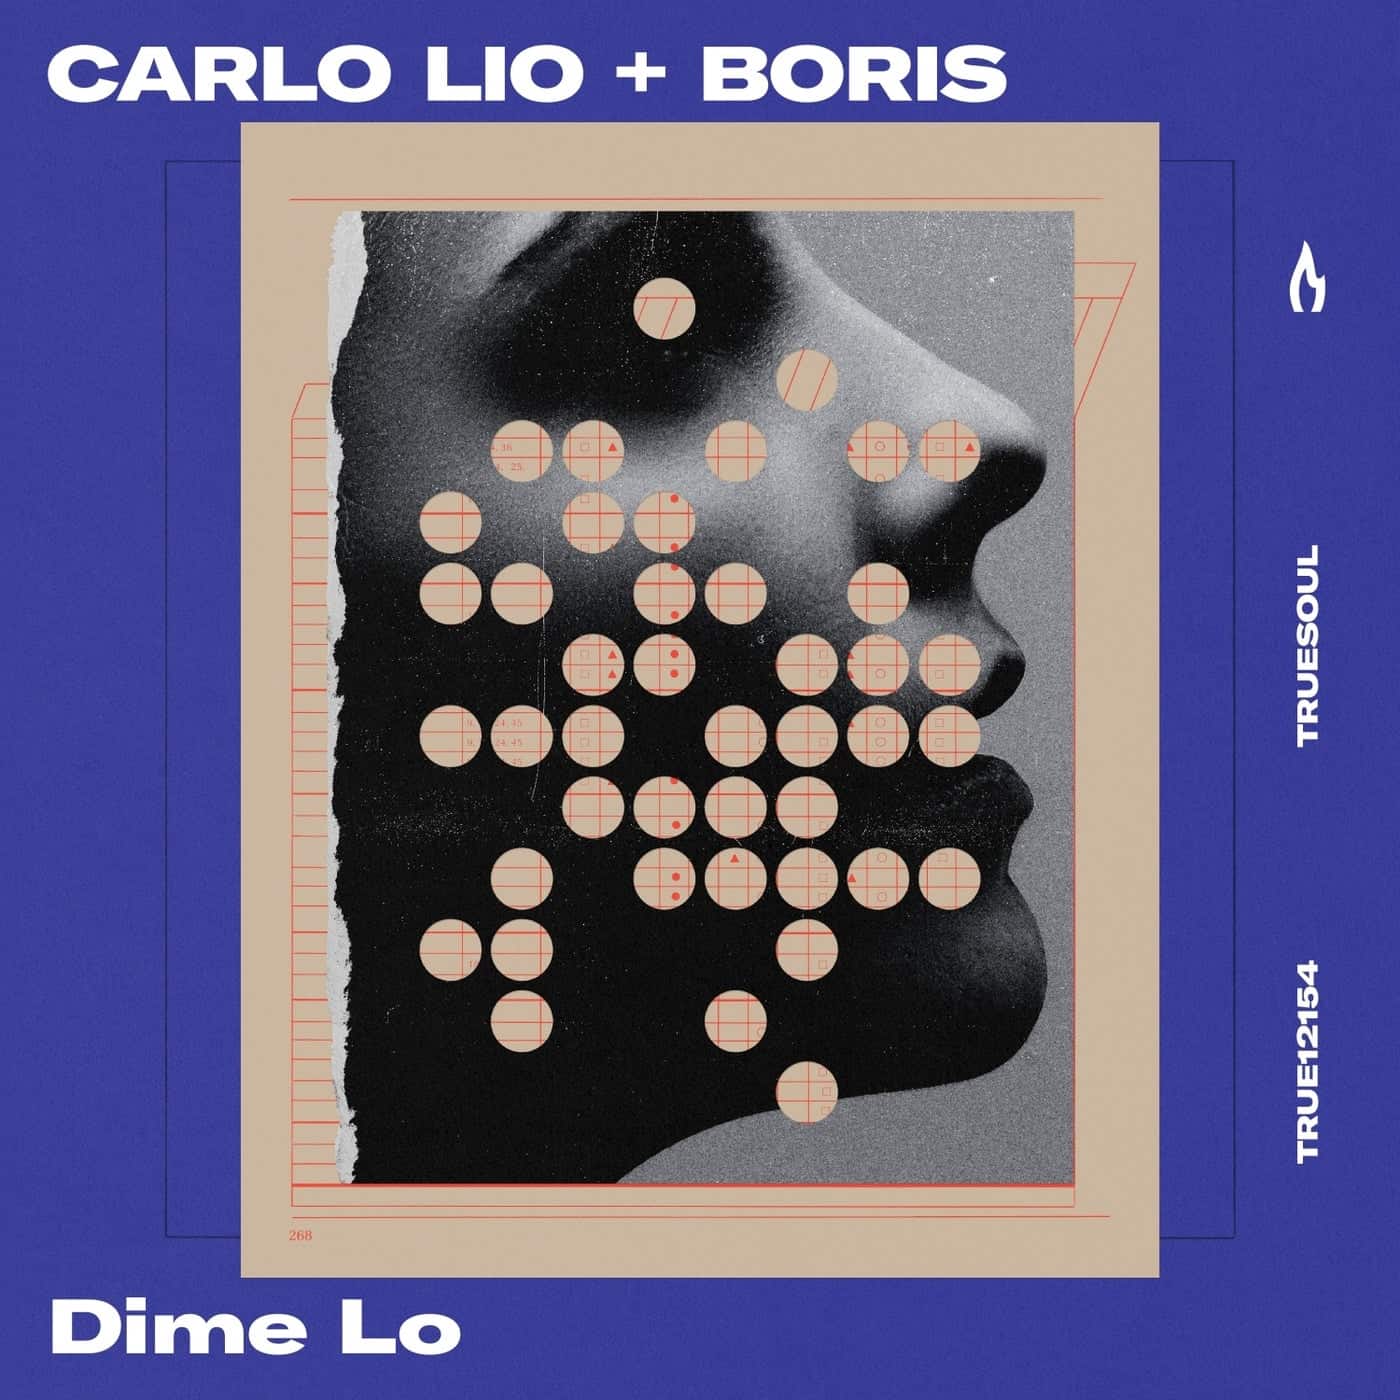 Download DJ Boris, Carlo Lio - Dime Lo on Electrobuzz